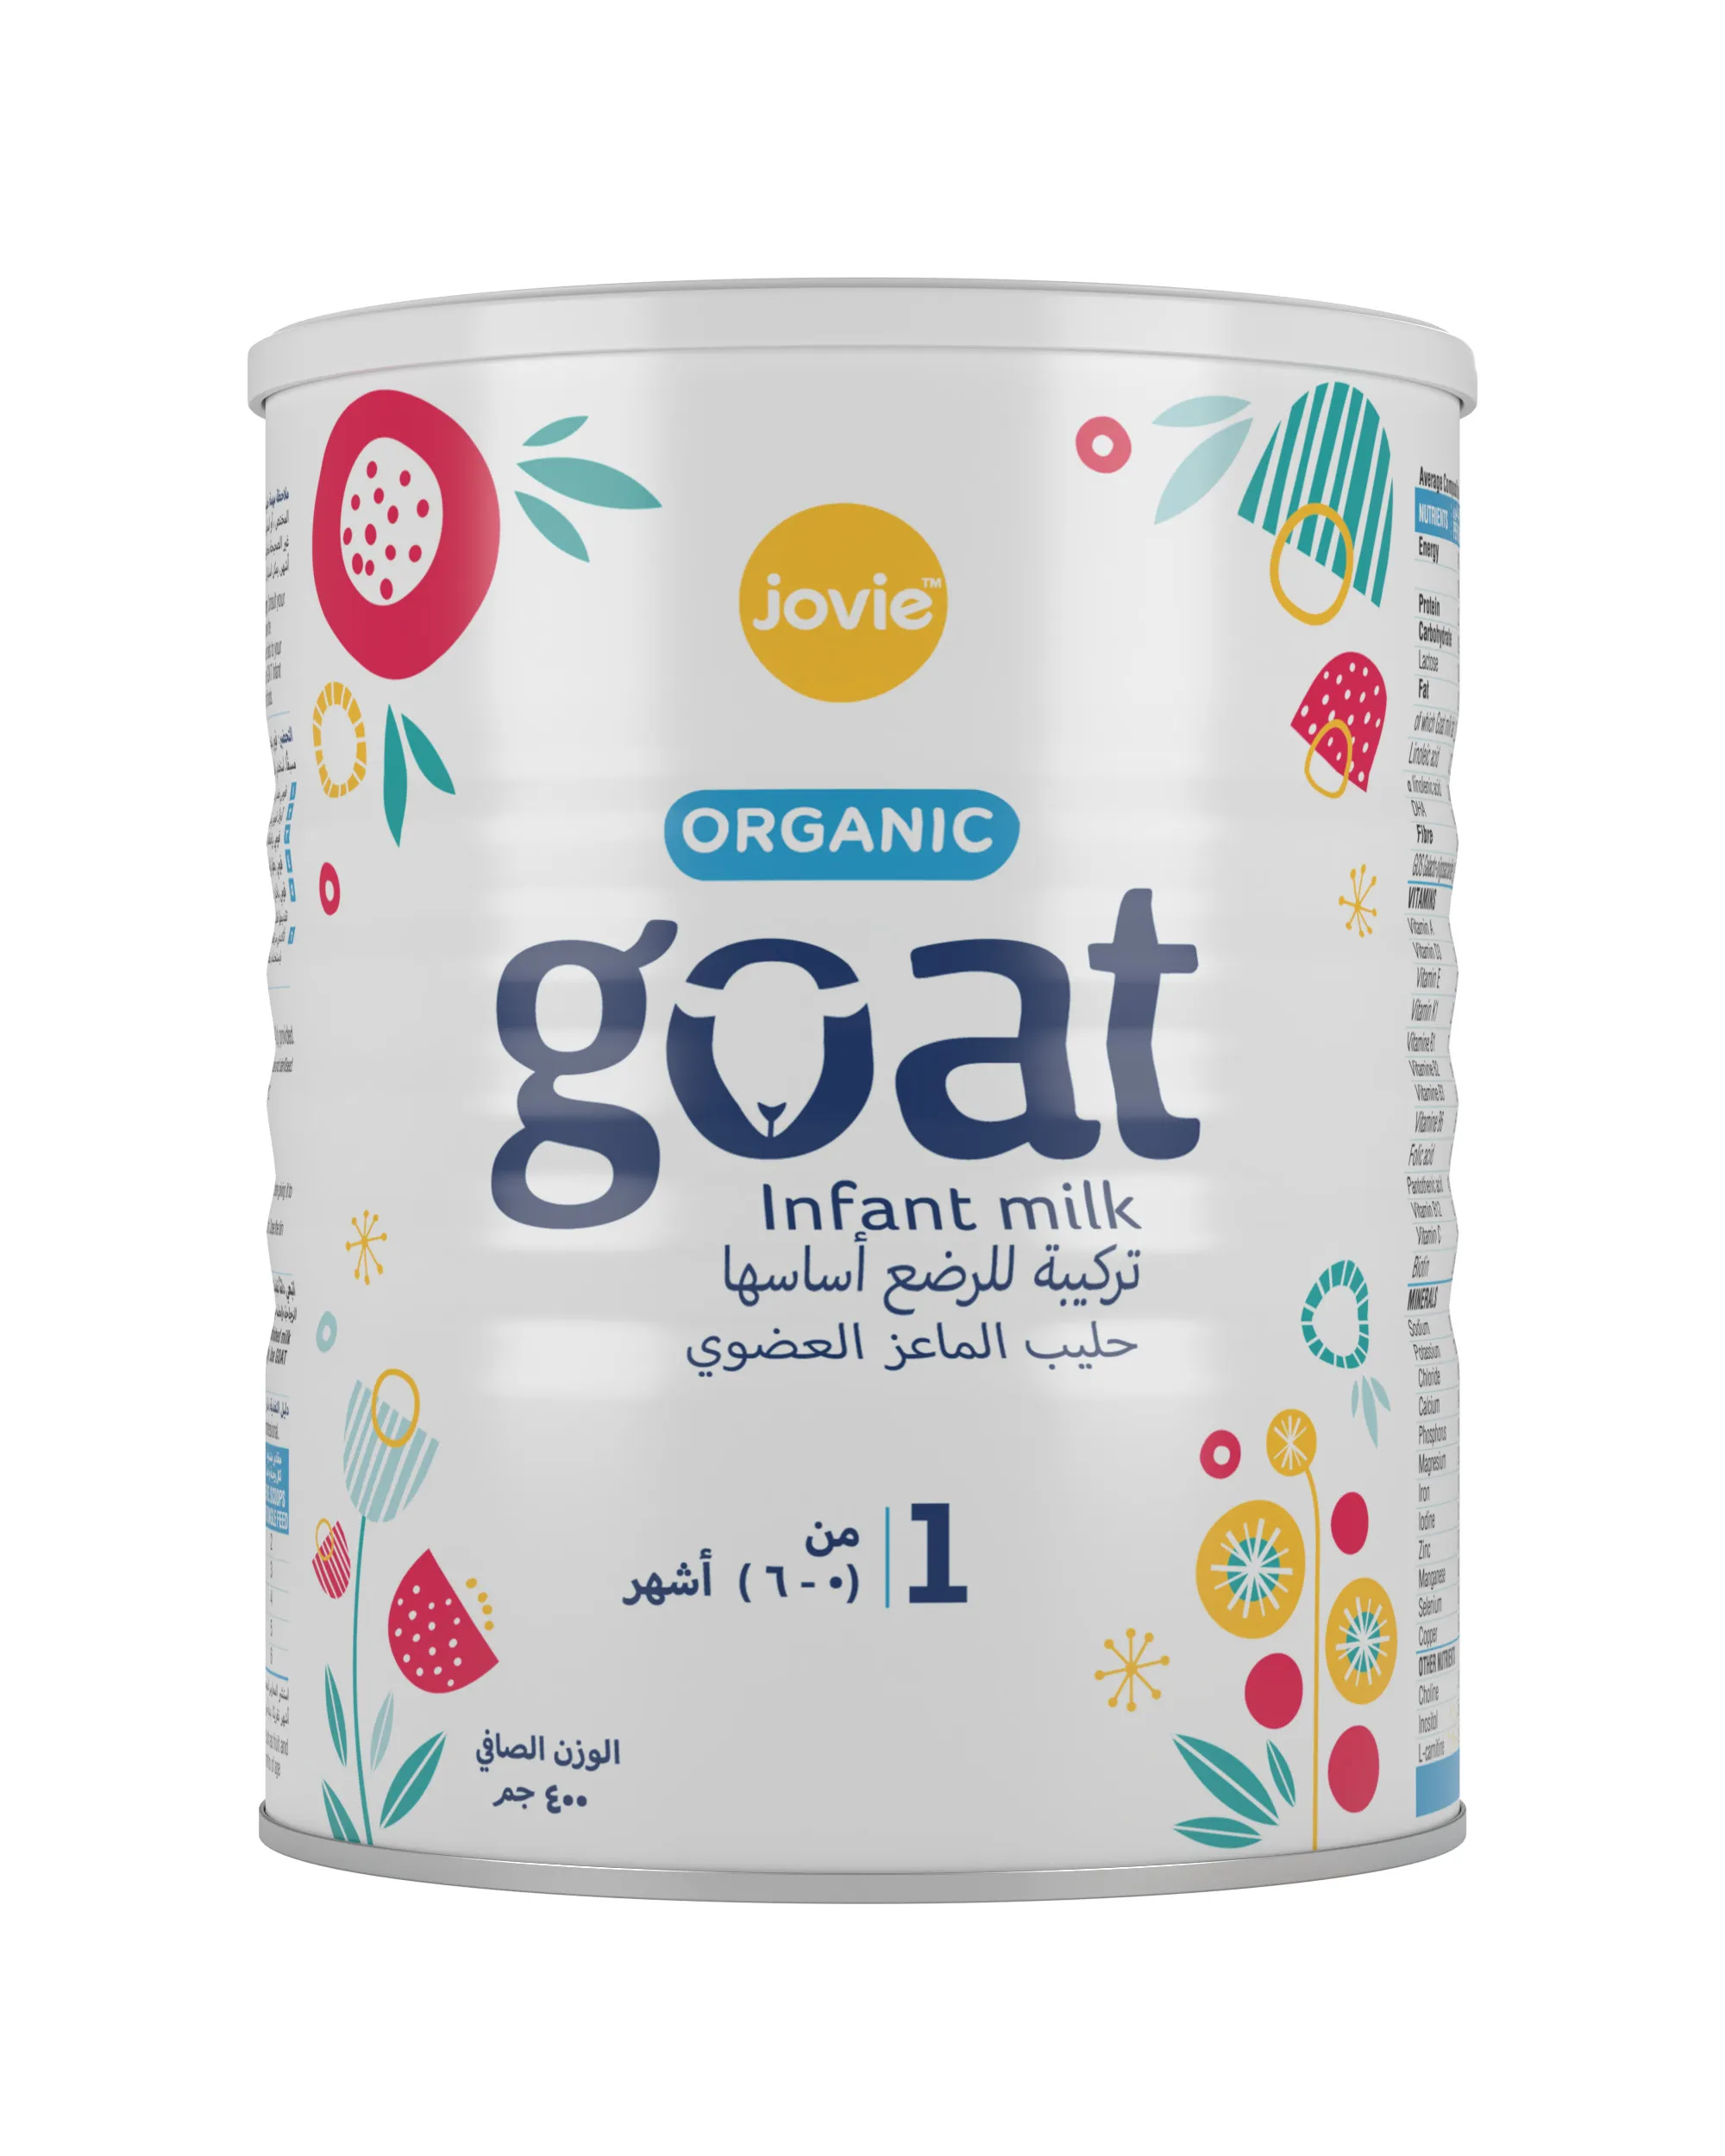 Jovie Goat (1), Organic Goat Milk Infant Formula